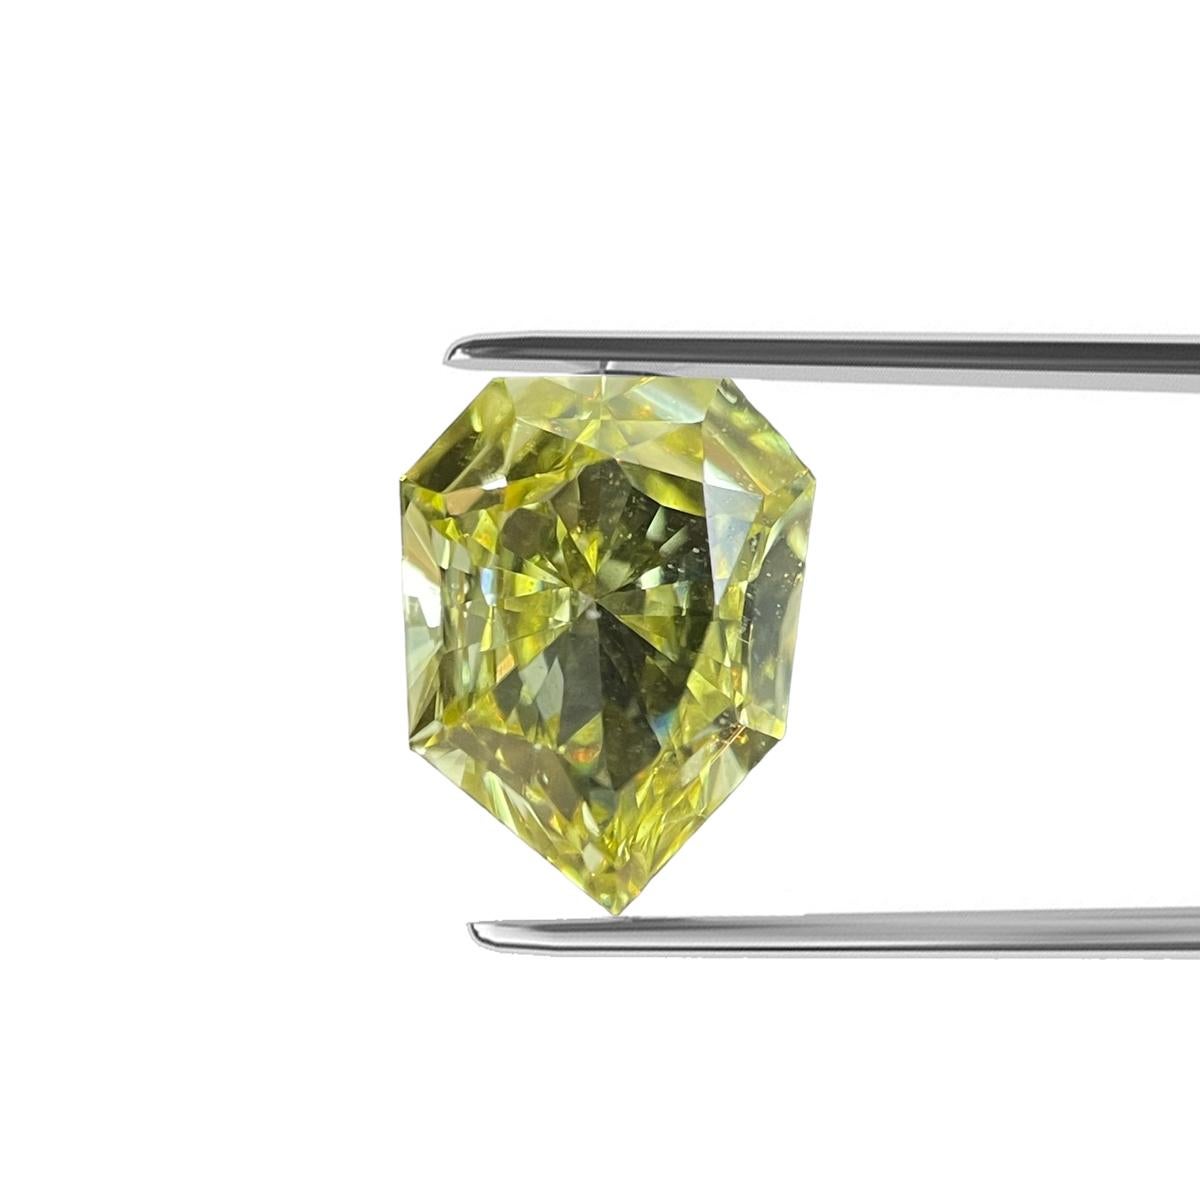 ITEM DESCRIPTION

ID #: 55308
Stone Shape: Duchess 
Diamond Weight: 0.87CT 
Clarity: VS1
Color: Fancy Intense Yellow 
Cut:	Excellent
Measurements: 7.49x5.82x2.83mm
Depth %:	48.75%
Table %:	54%
Symmetry: Good
Polish: Good
Fluorescence: